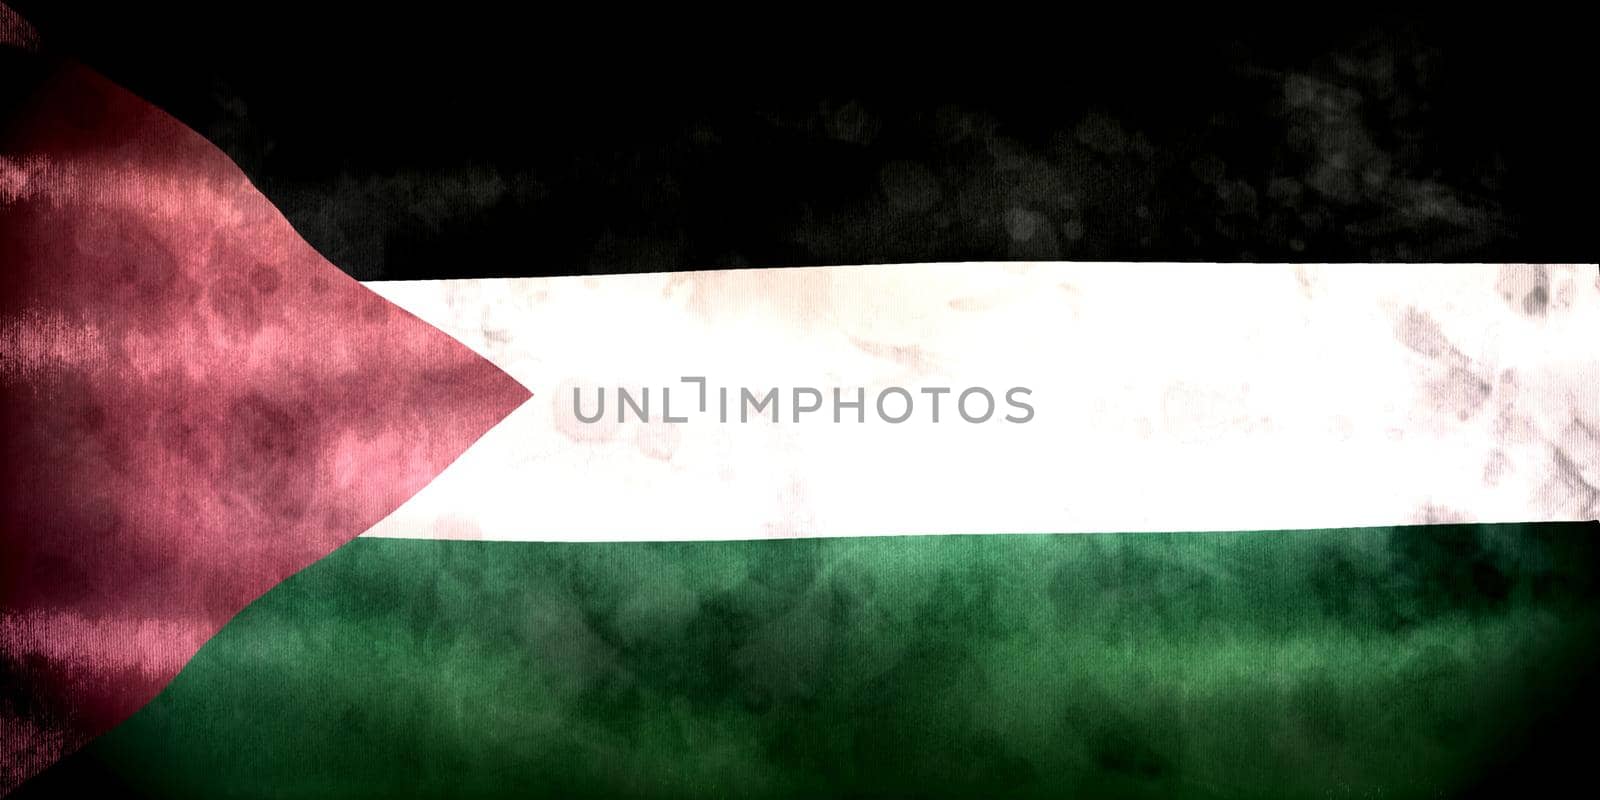 Palestine flag - realistic waving fabric flag